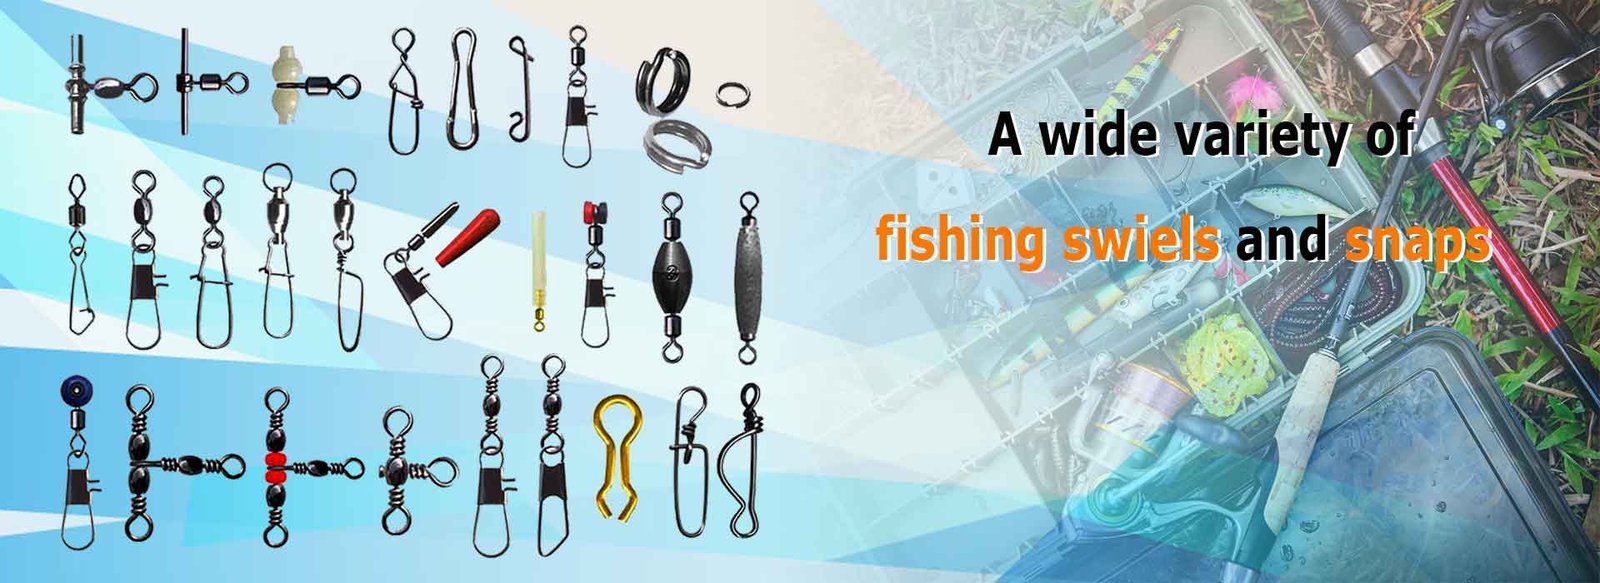 Fishing Swivels Fishing Swivels & Snaps in Fishing Tackle